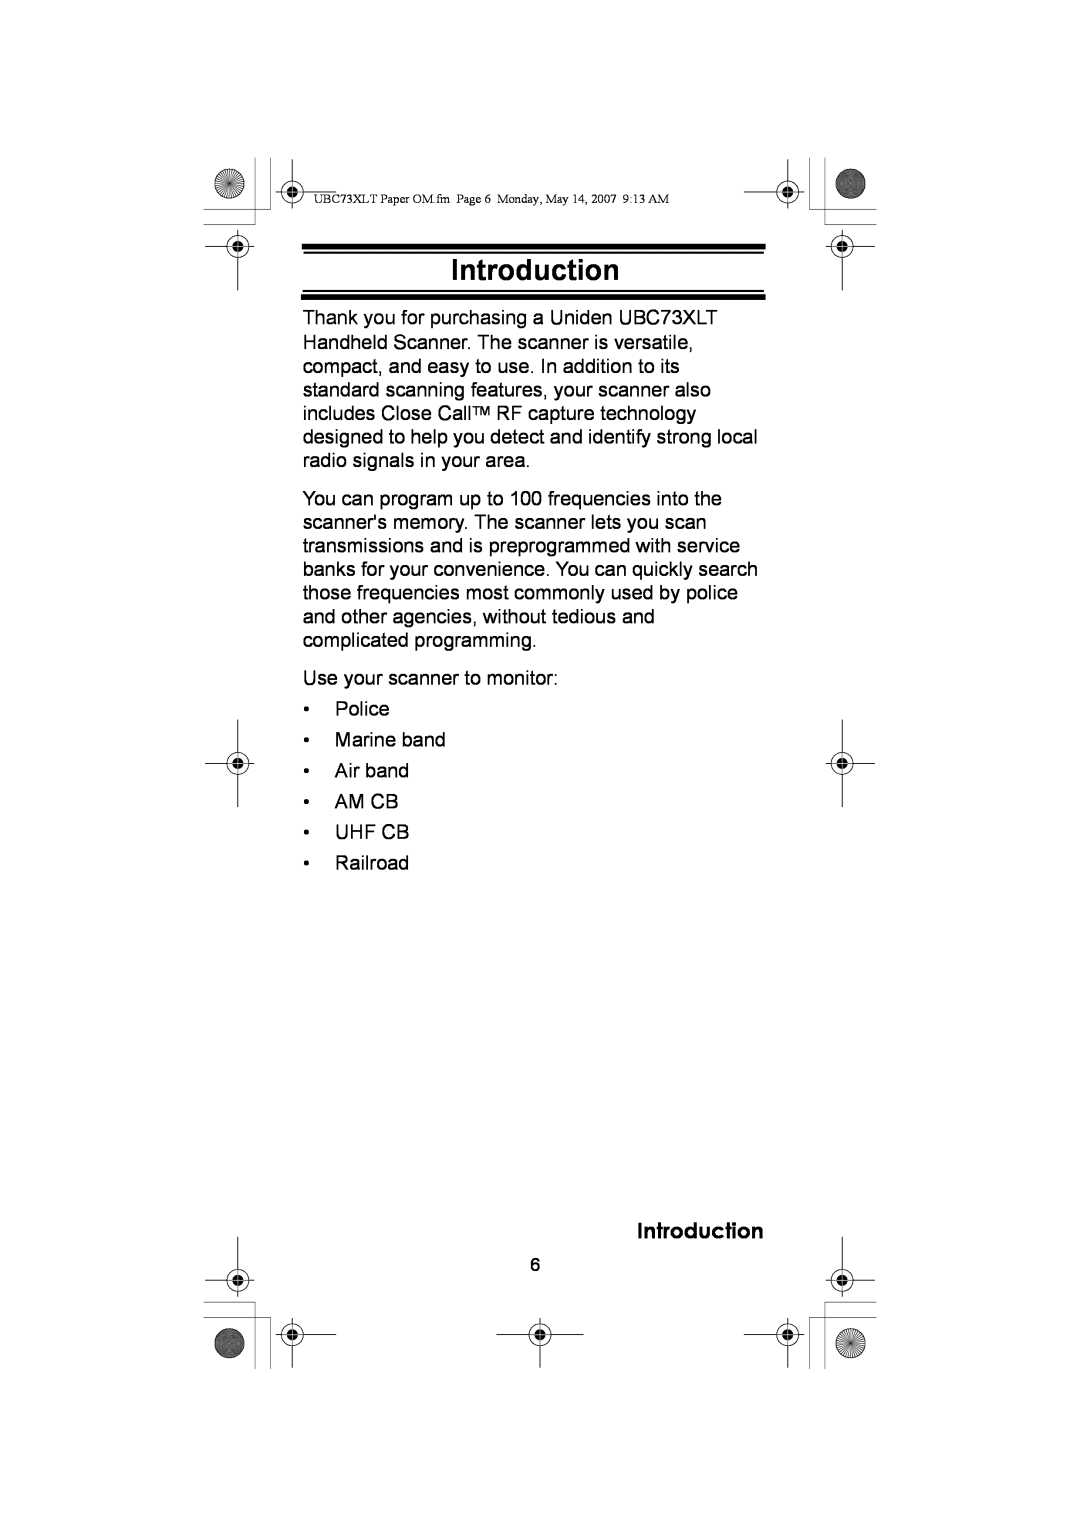 Uniden UBC73XLT owner manual Introduction 